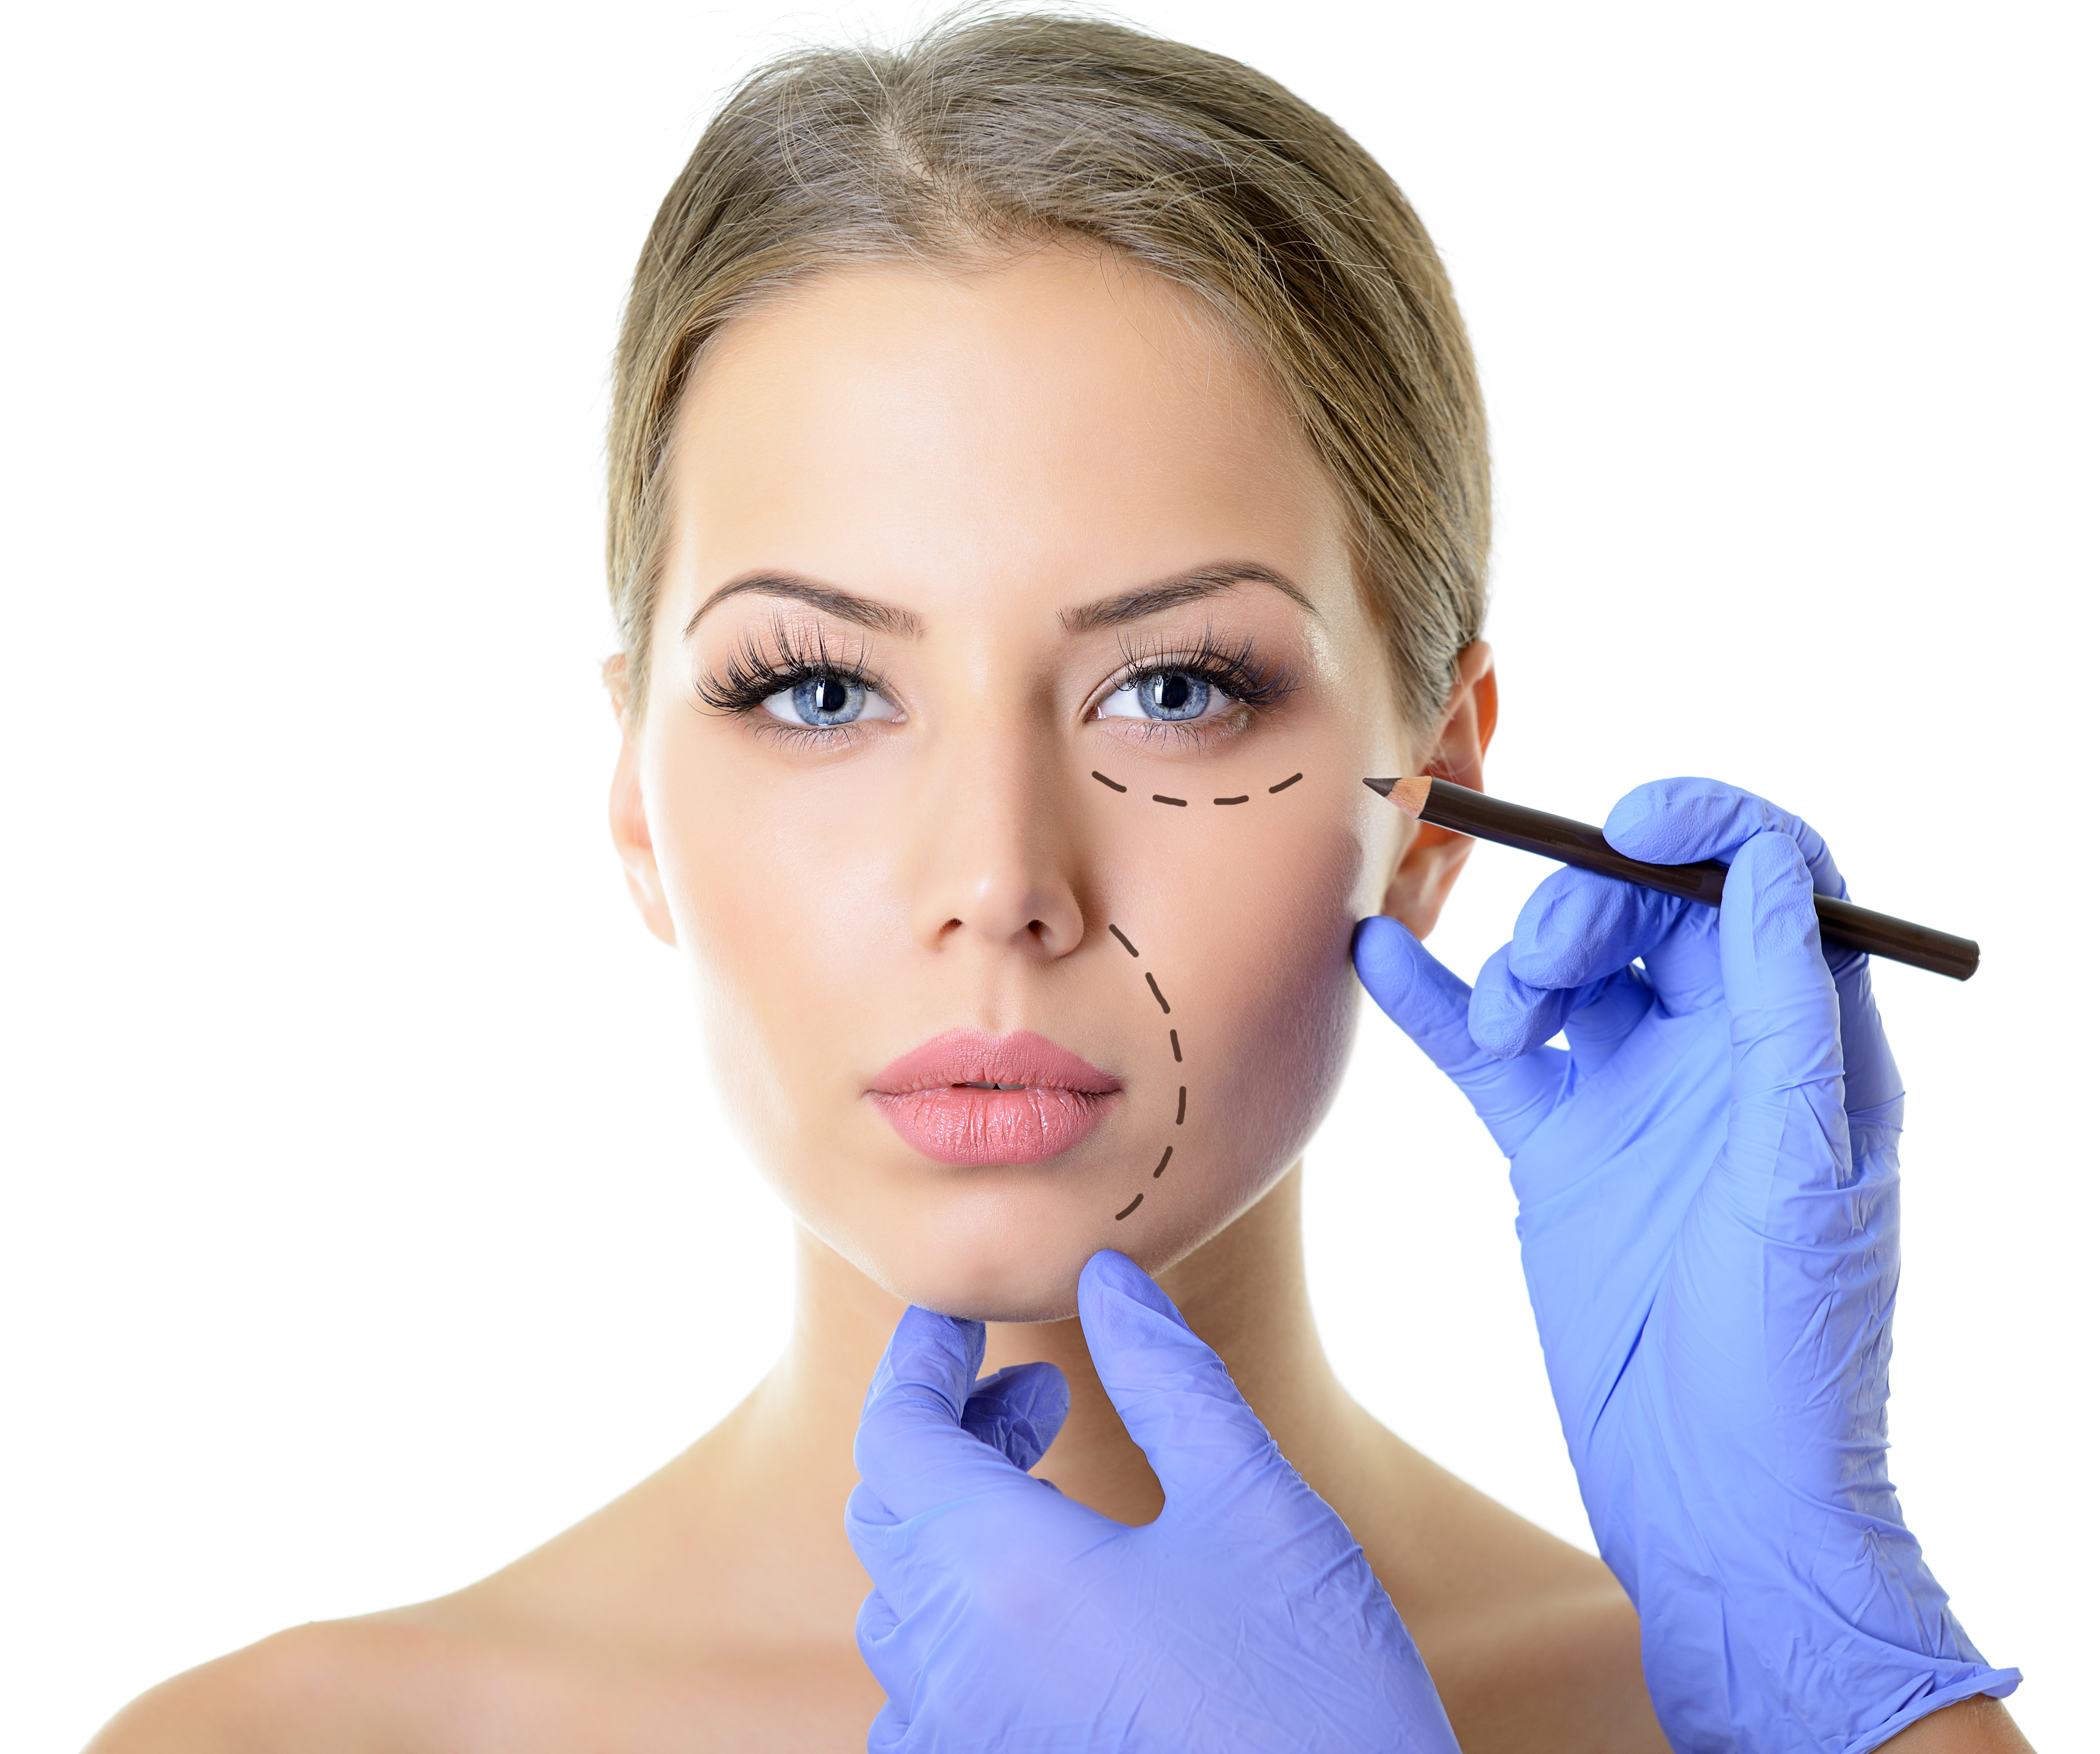 Facial Cosmetic Surgery